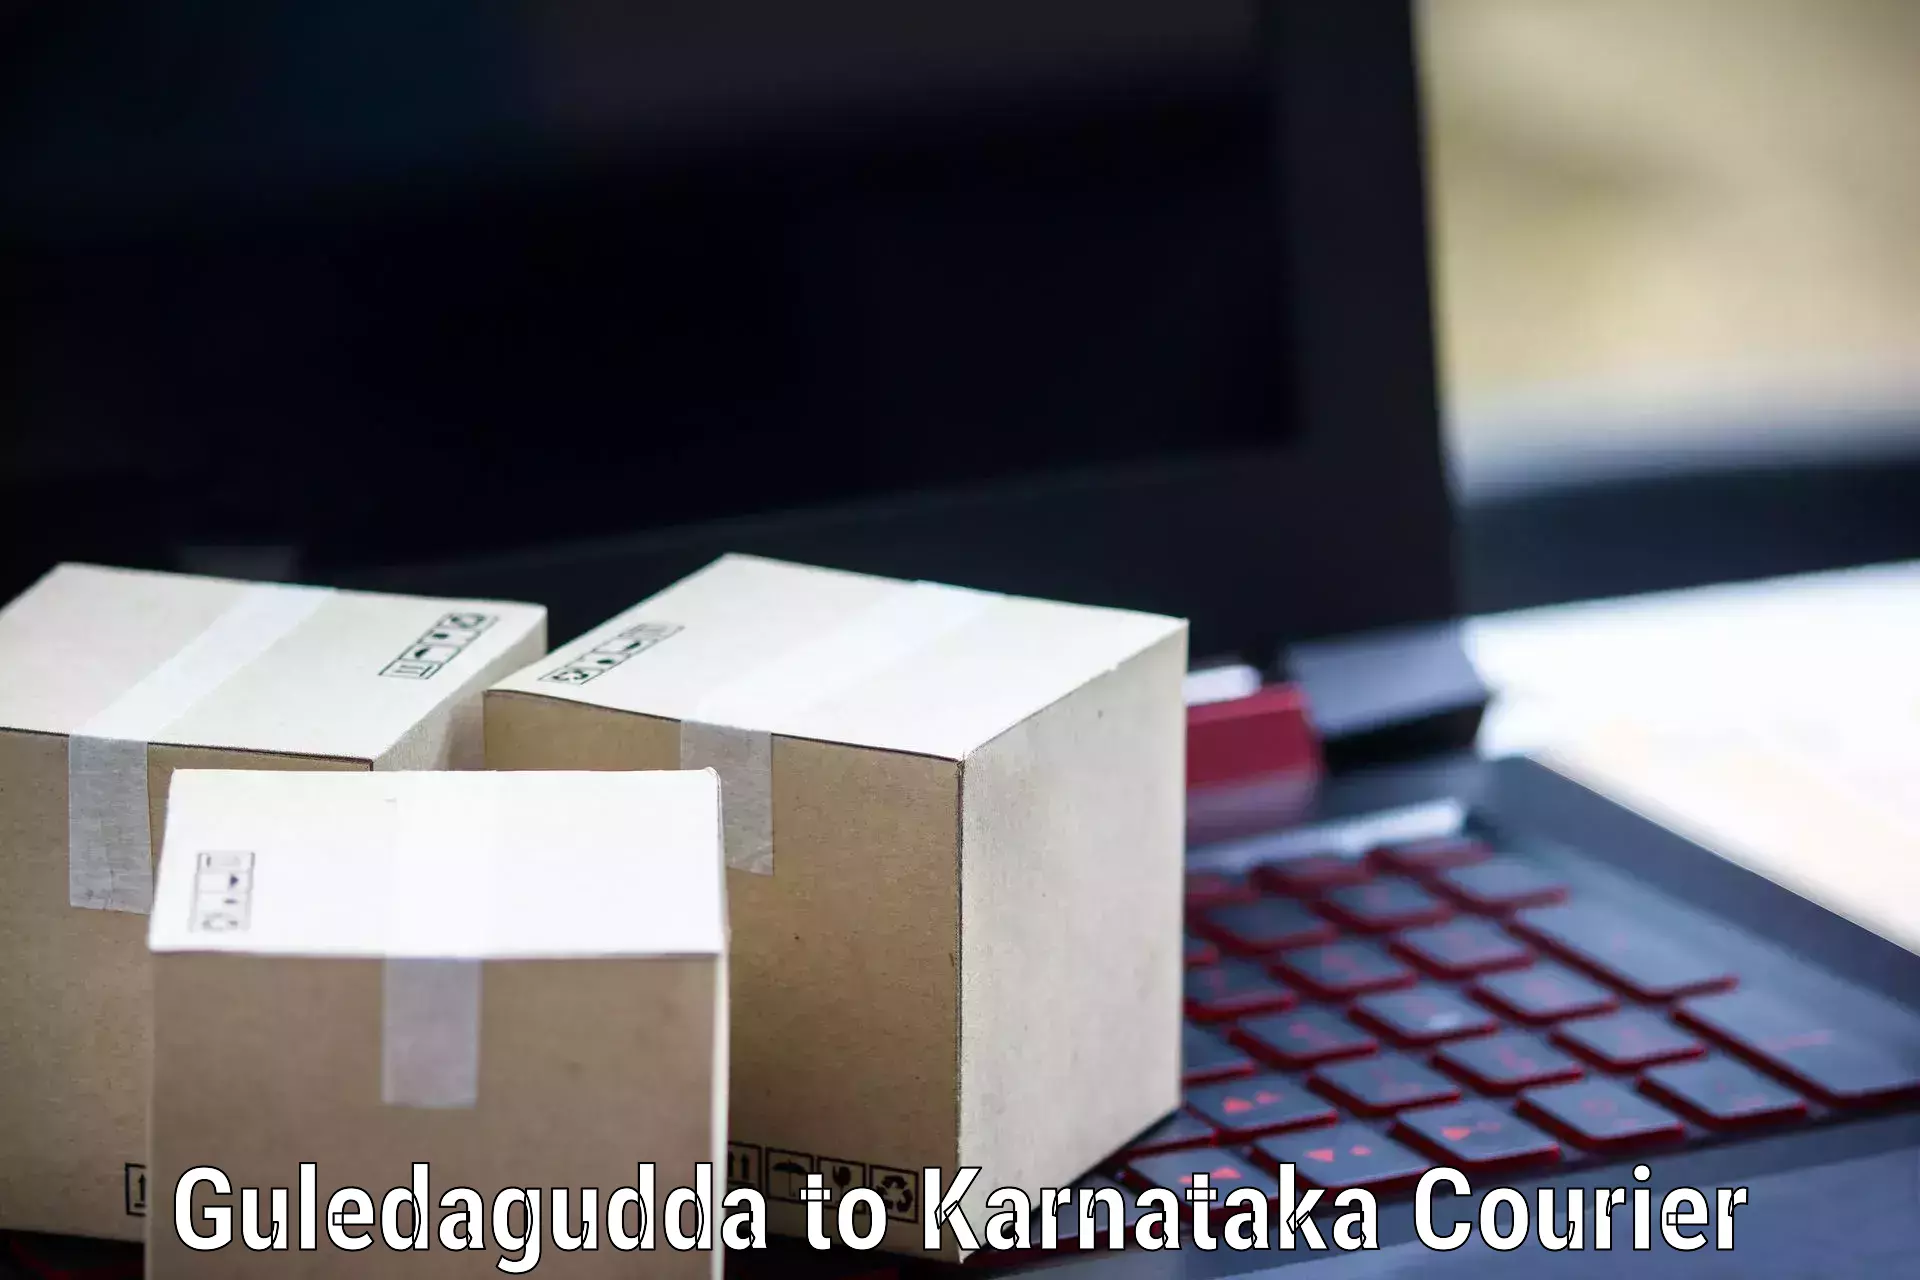 State-of-the-art courier technology Guledagudda to Sindagi